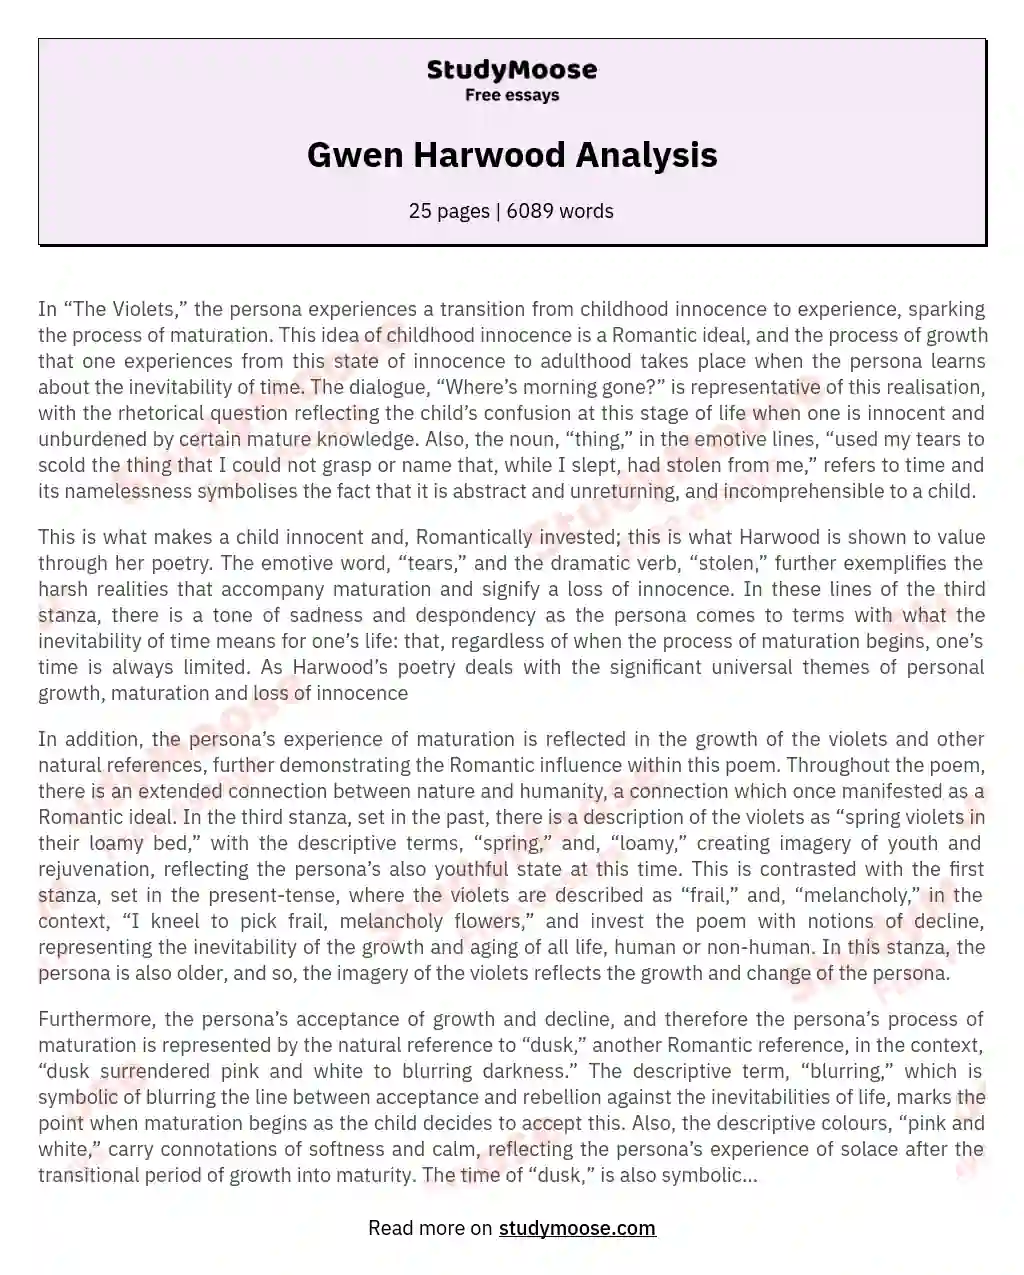 Gwen Harwood Analysis essay